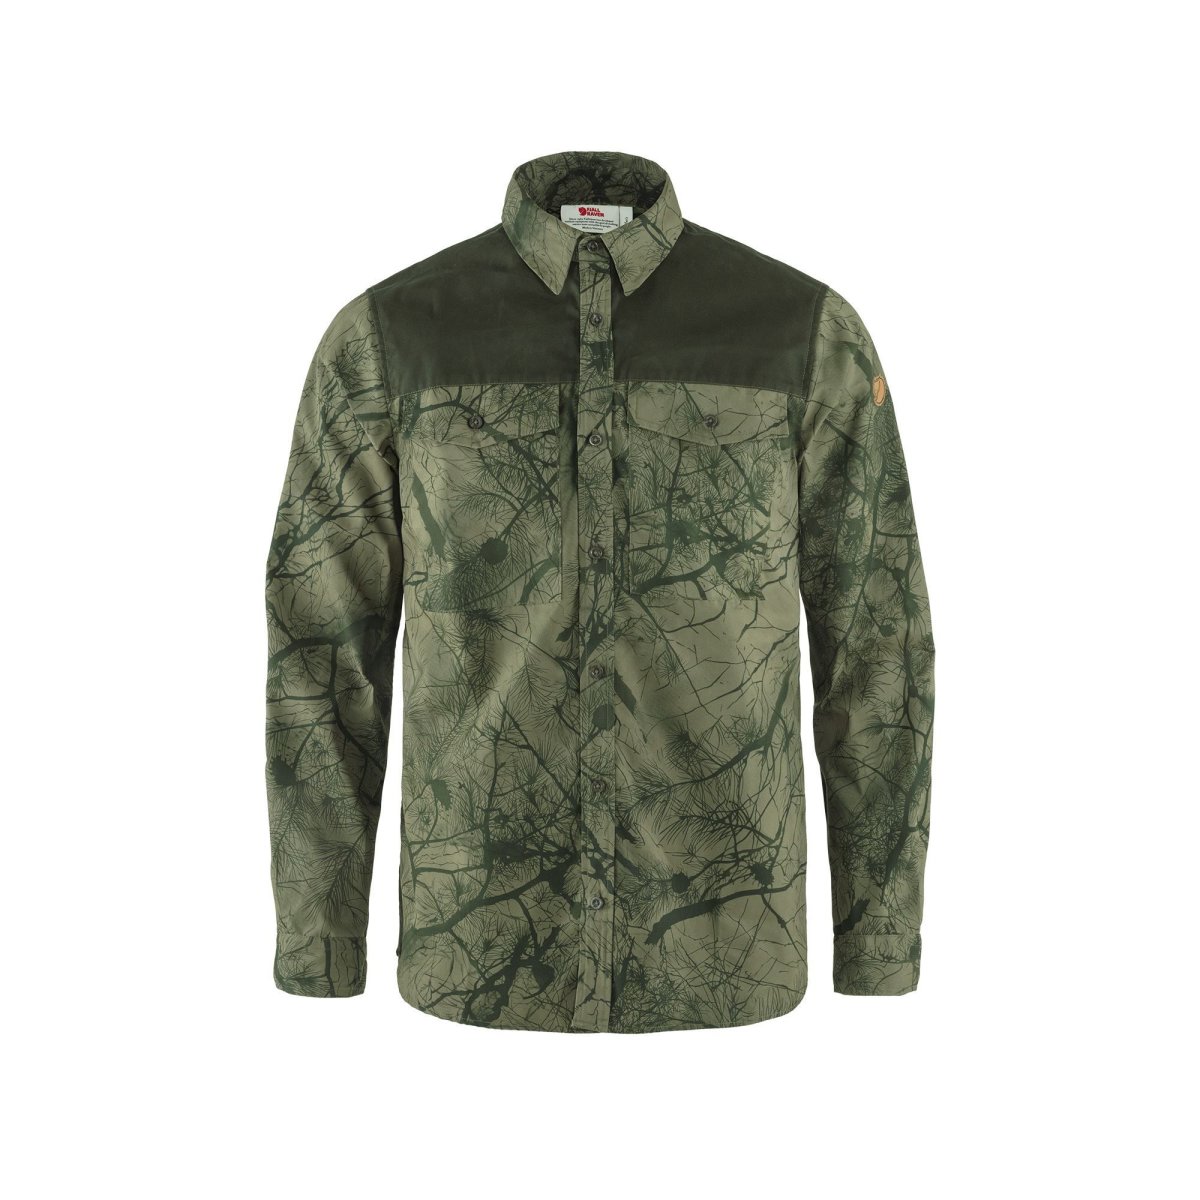 Fj&auml;llr&auml;ven V&auml;rmland G-1000 Shirt 87326 green-camo / deep forest G-1000 Jagdhemd Outdoorhemd Tarnhemd